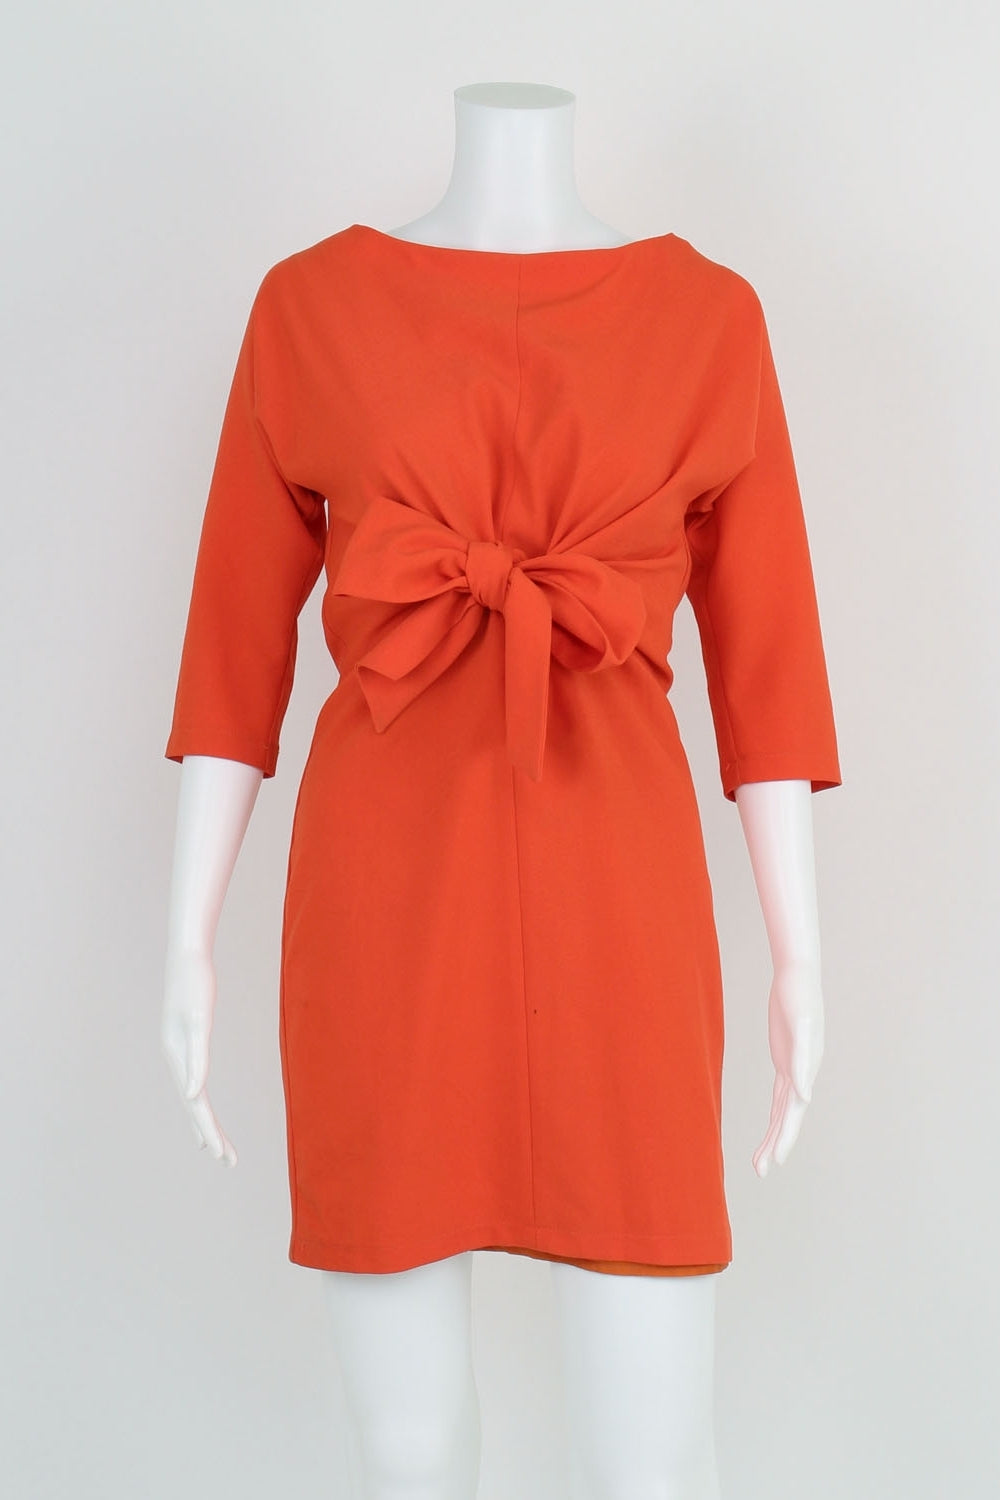 ASOS Orange Tie Front Dress 4